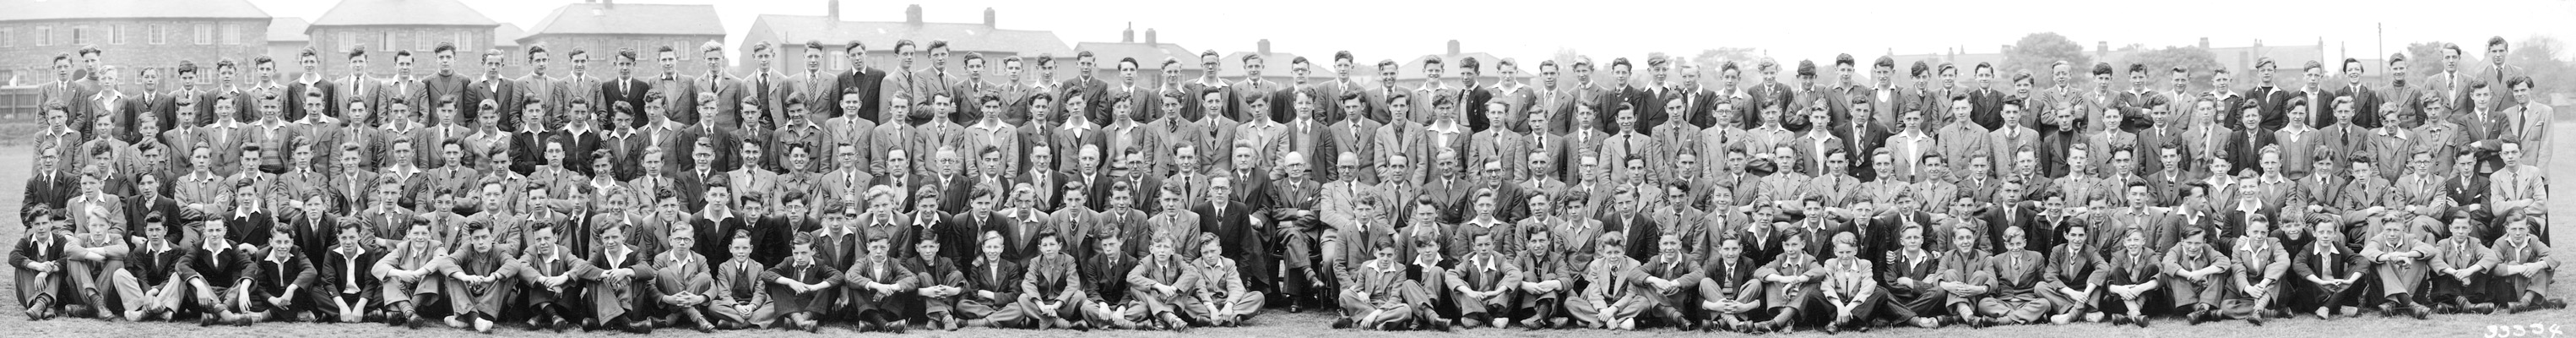 1950/1 - Seniors